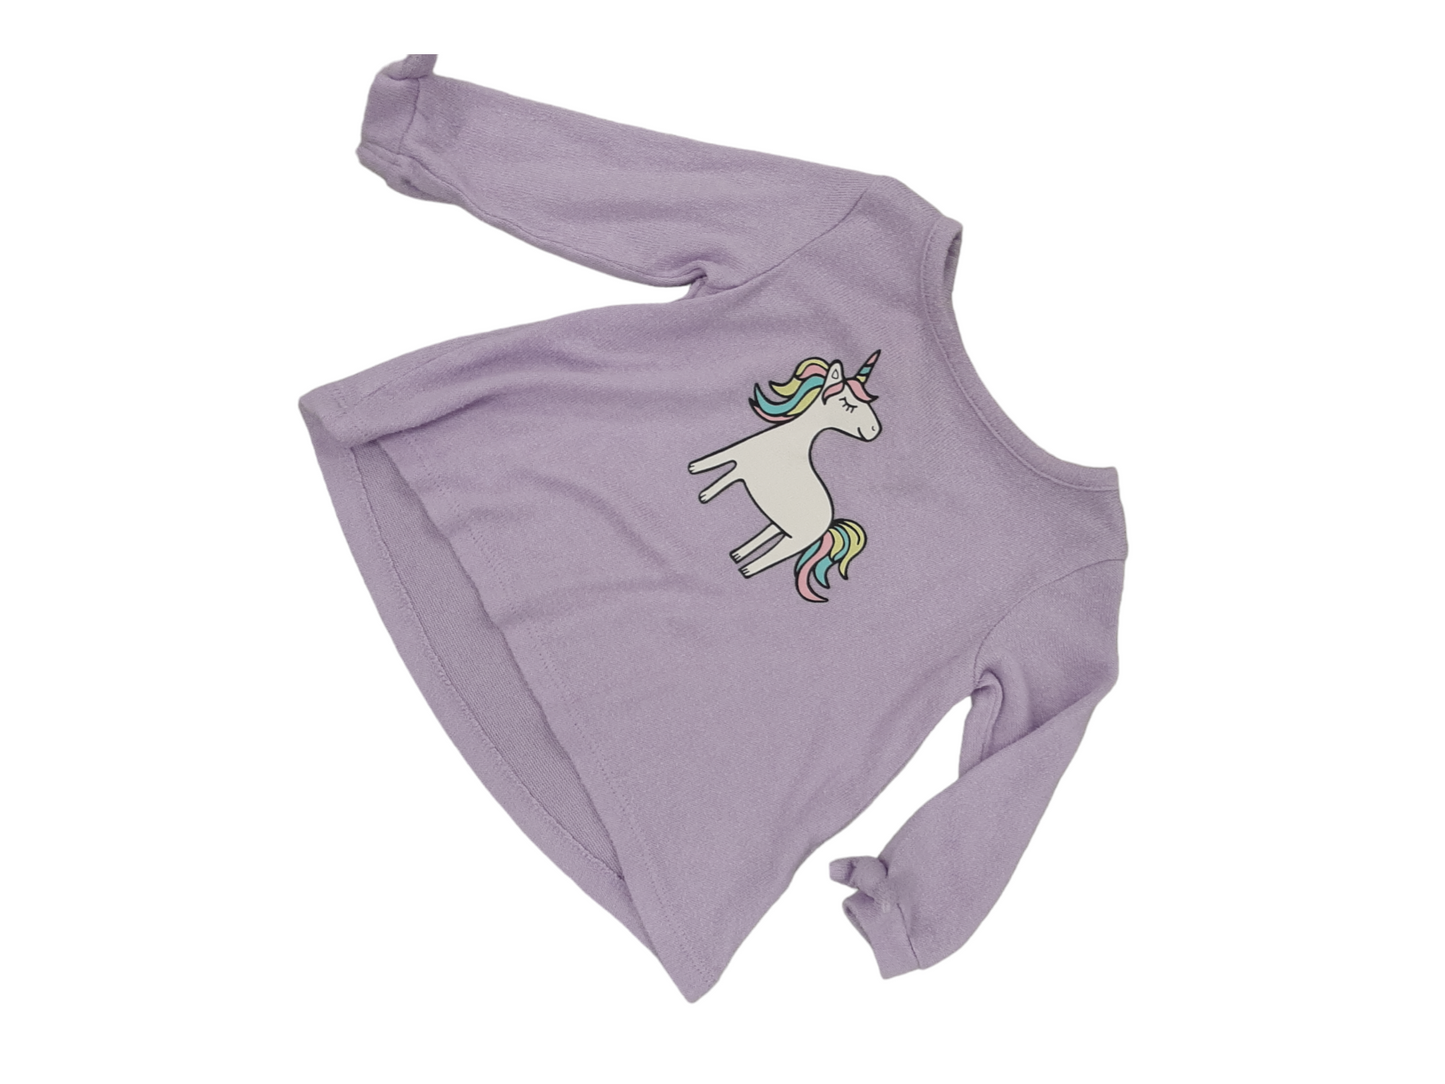 Thin unicorn sweater size 3 to 6 months